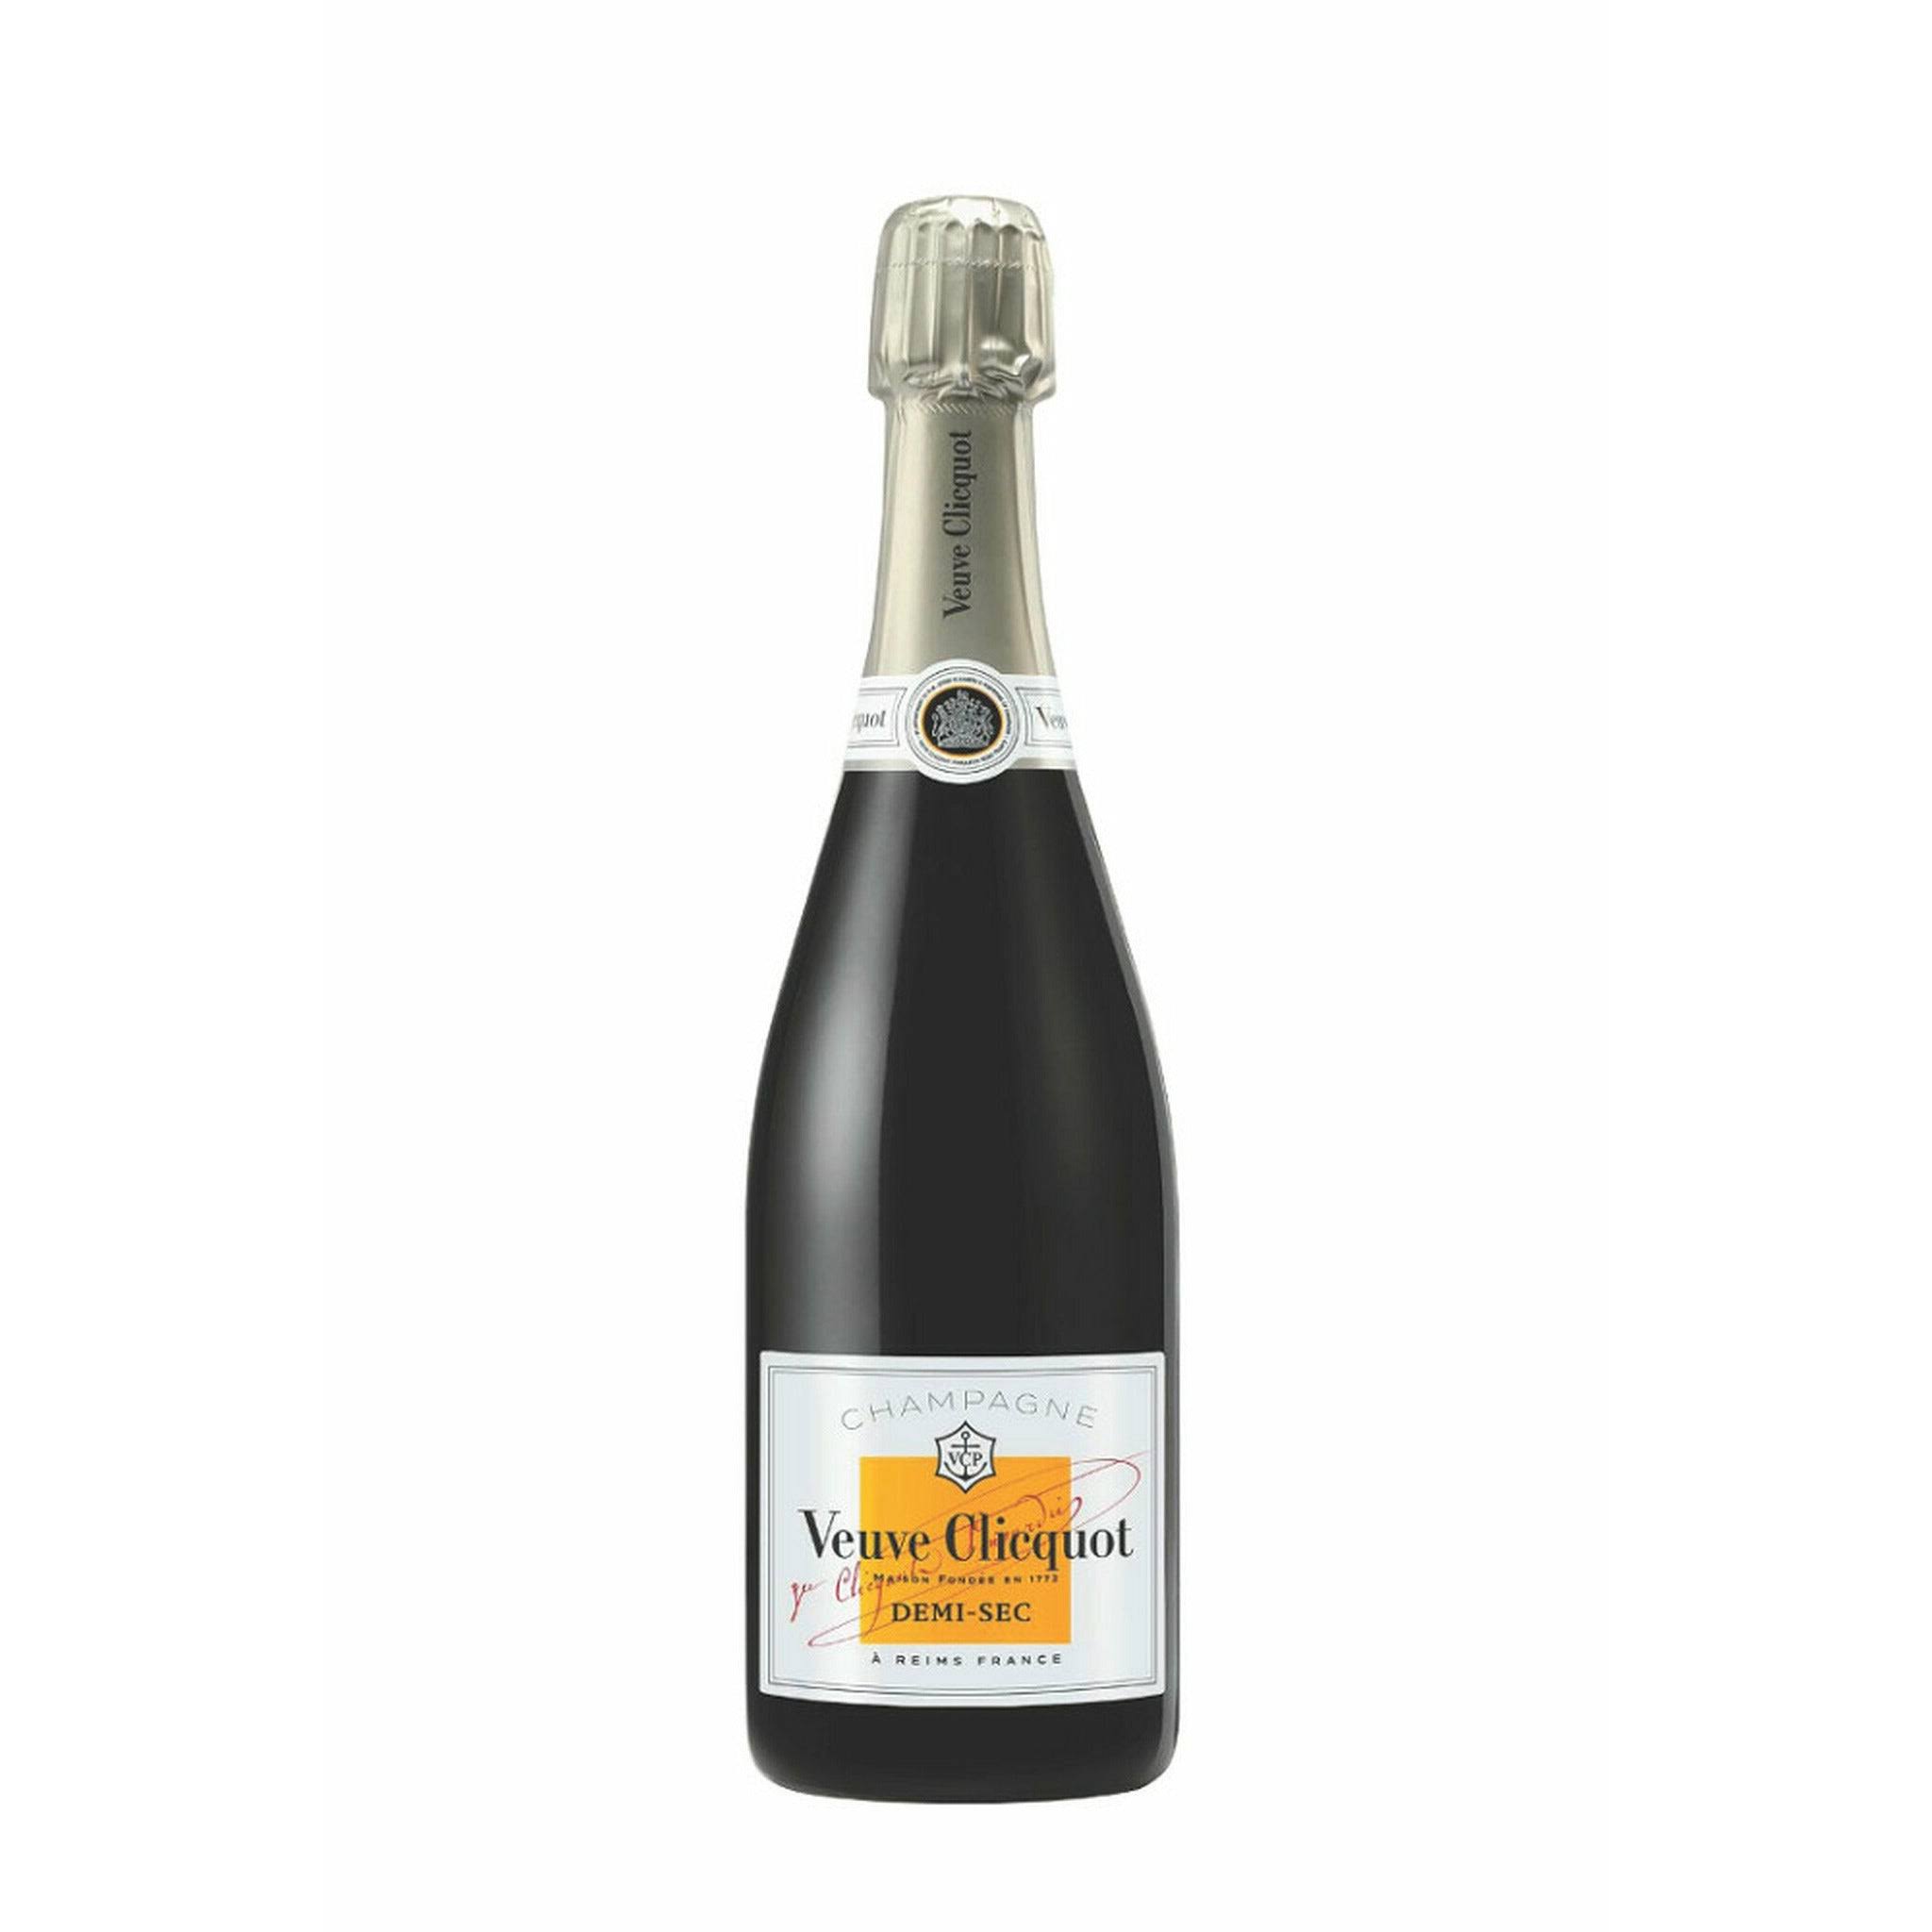 Veuve Clicquot Ponsardin Champagne Demi-sec - 375 ml bottle